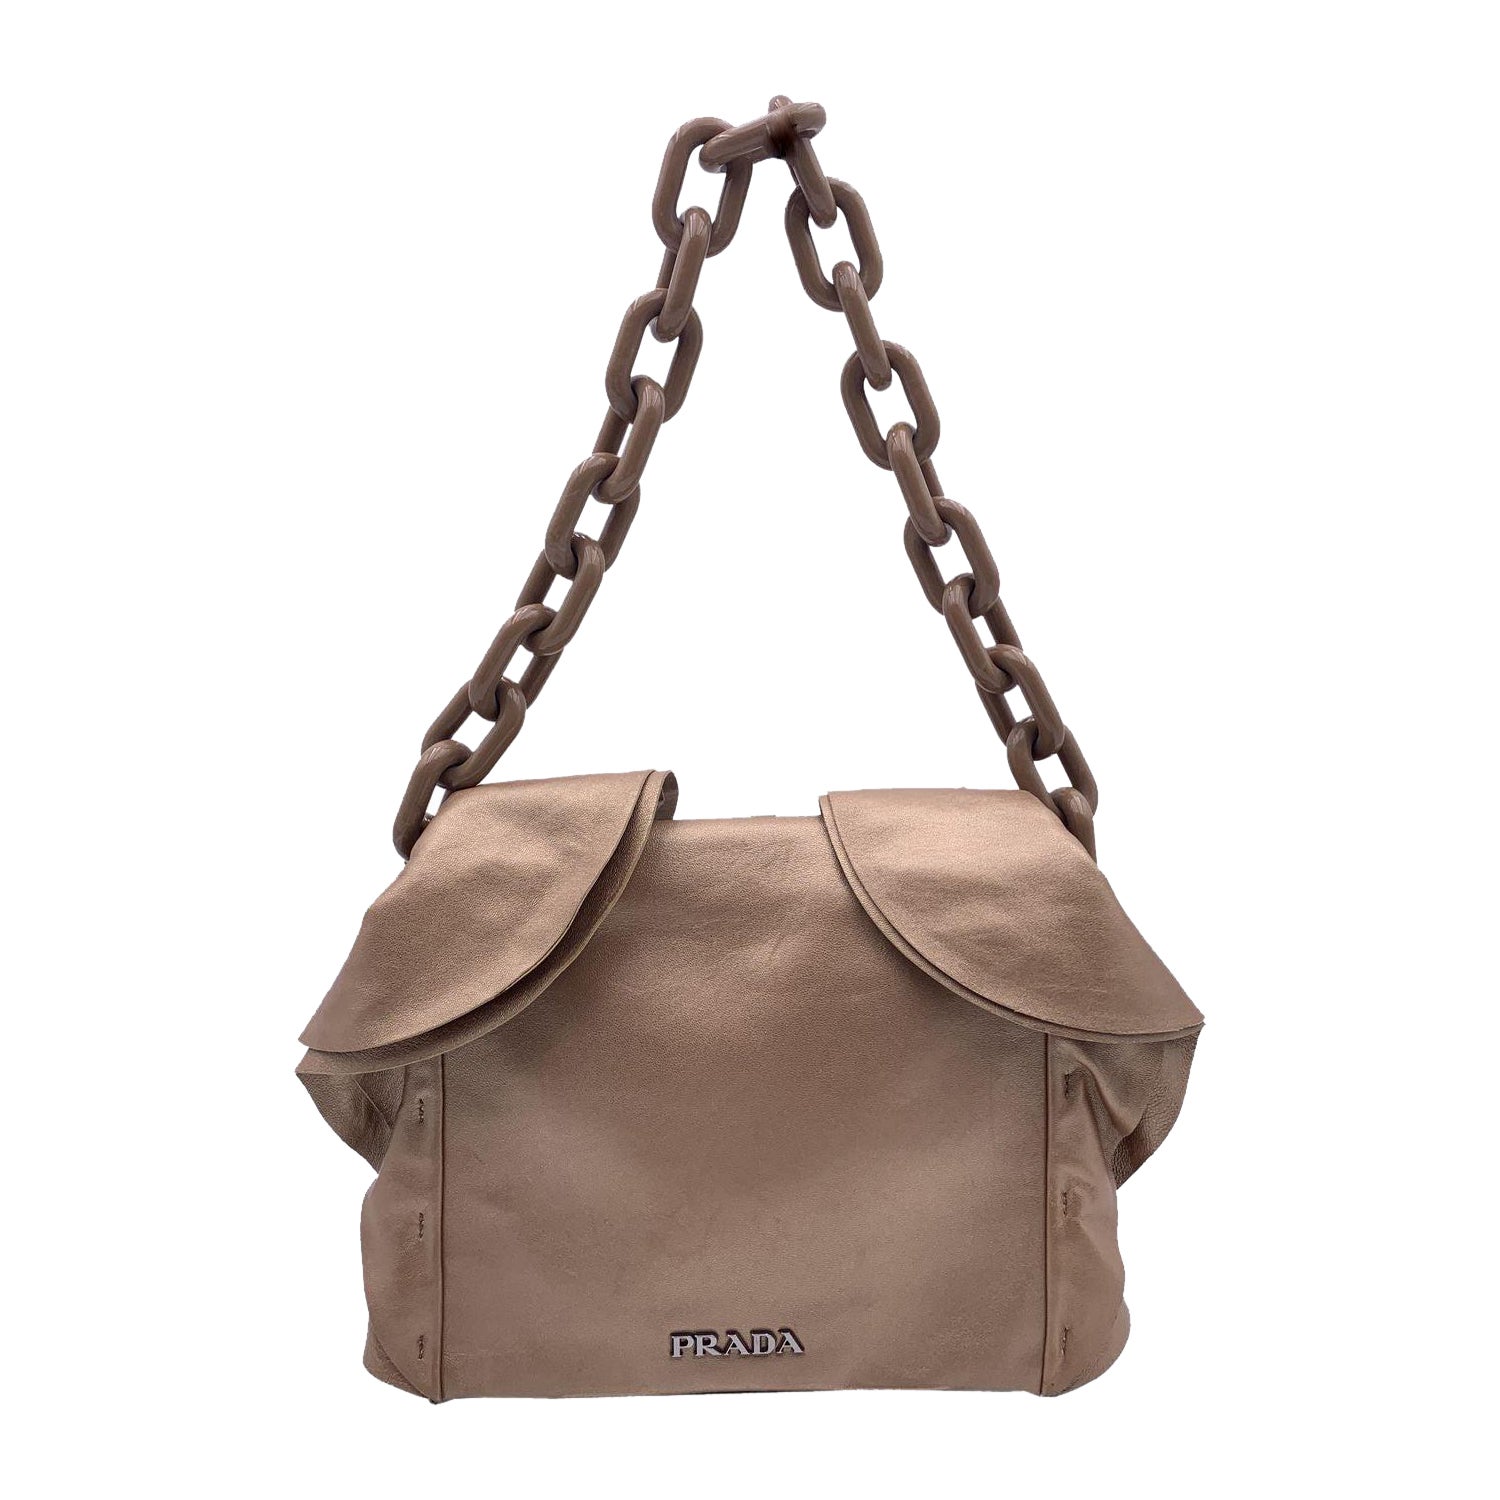 Prada Beige Metallic Leather Ruffle Shoulder Bag Lucite Chain Strap For Sale